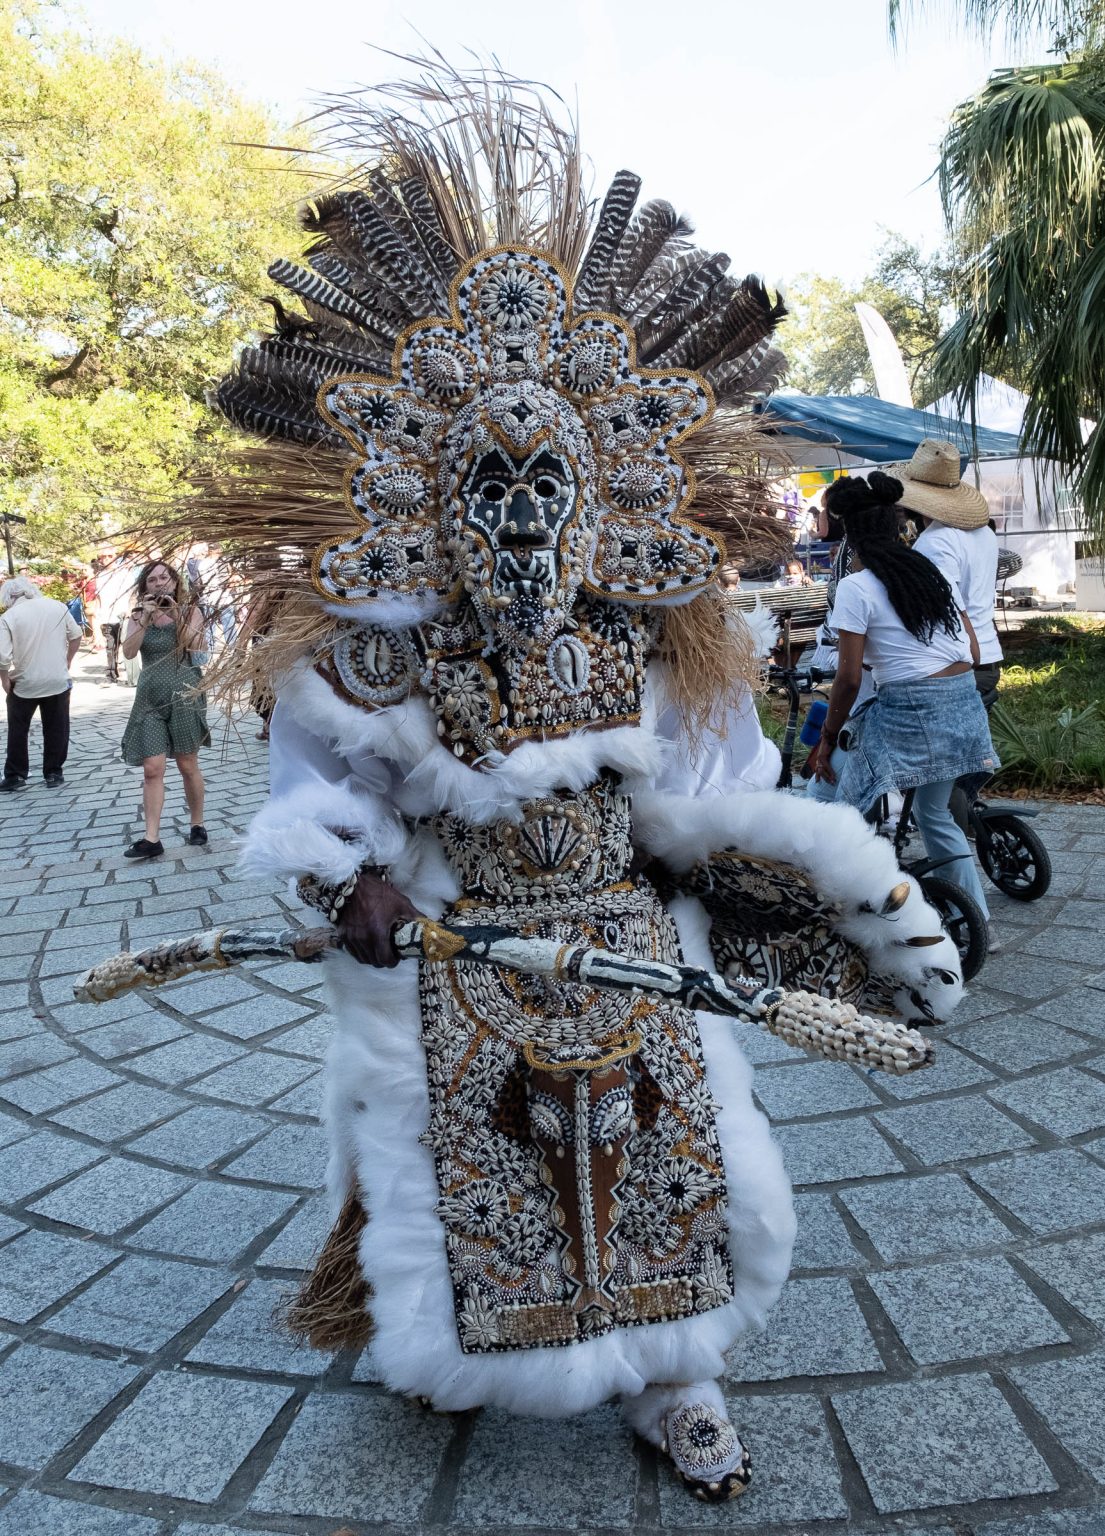 2022 Congo Square Rhythms Festival, Mardi Gras Indian Battle, Music, New Orleans